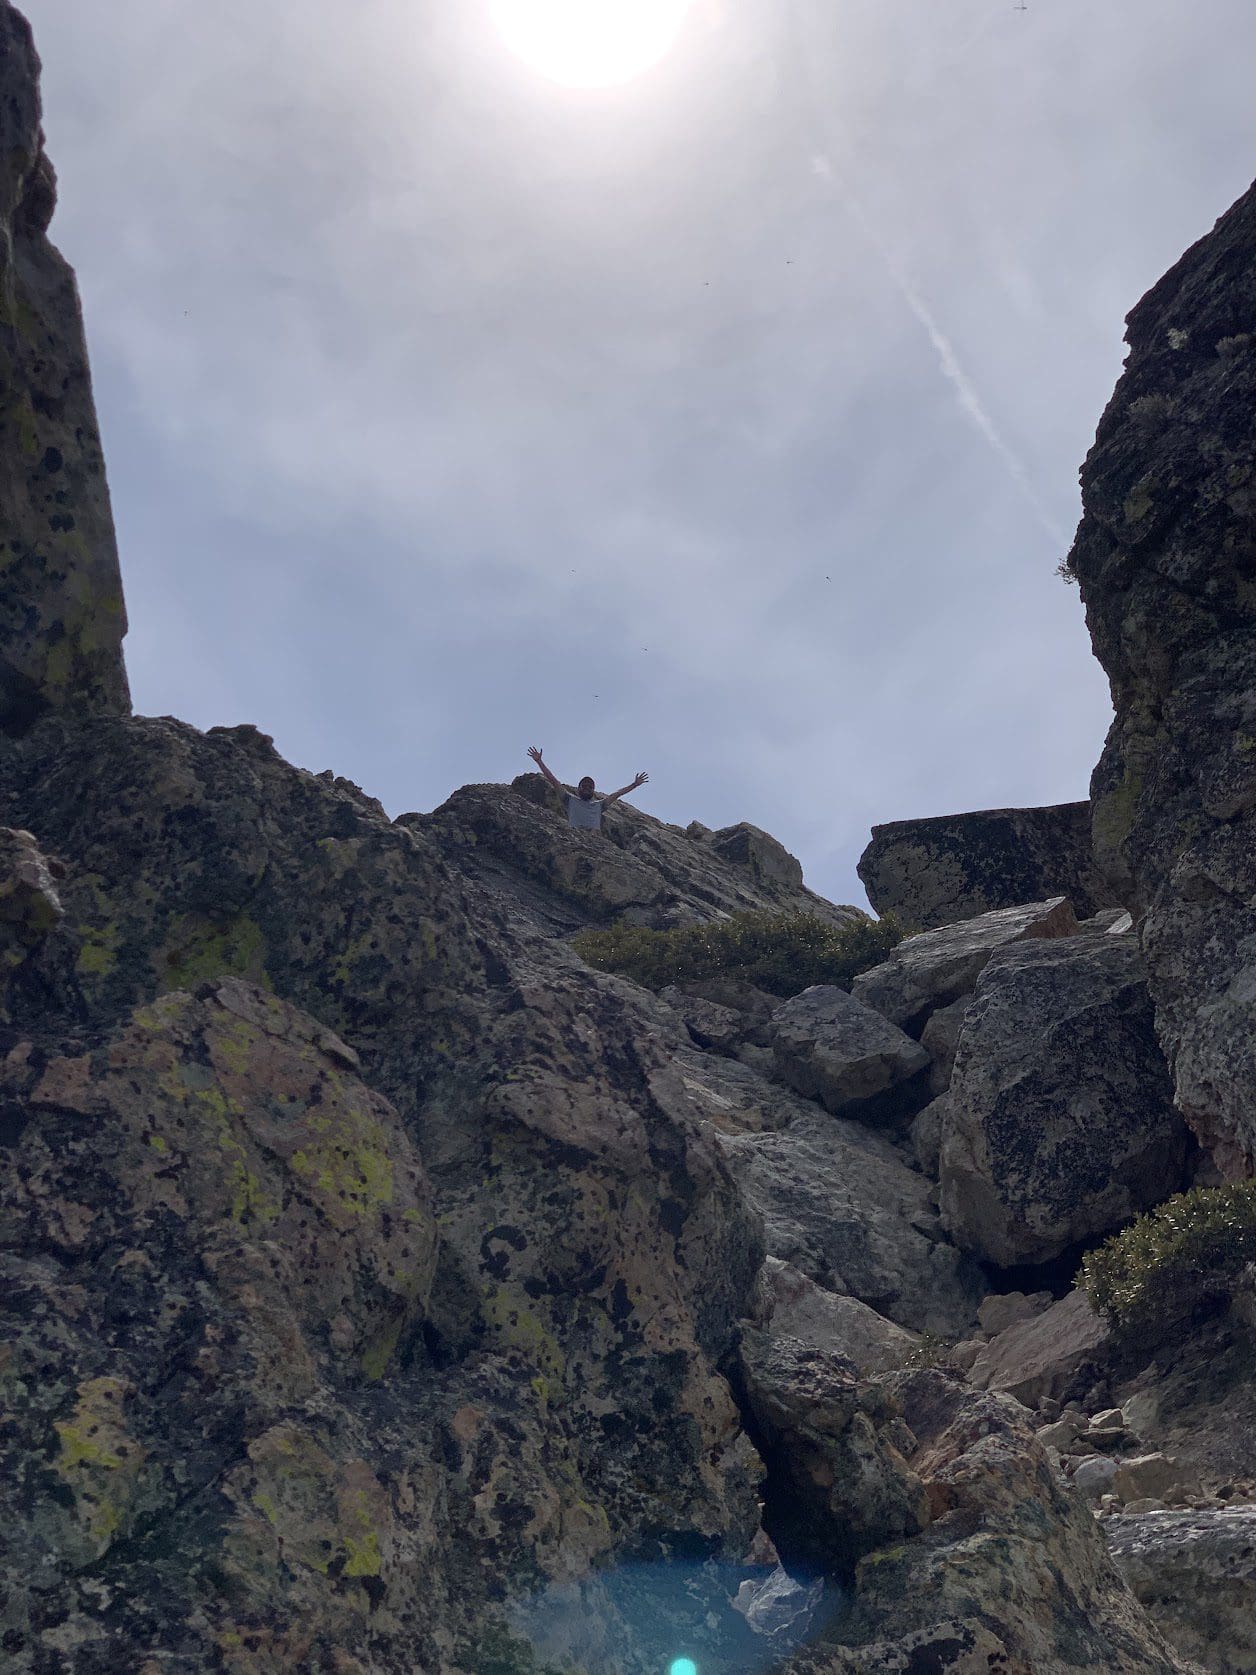 Adam, a developer, at the top of a cliff climb on a Boxcar retreat